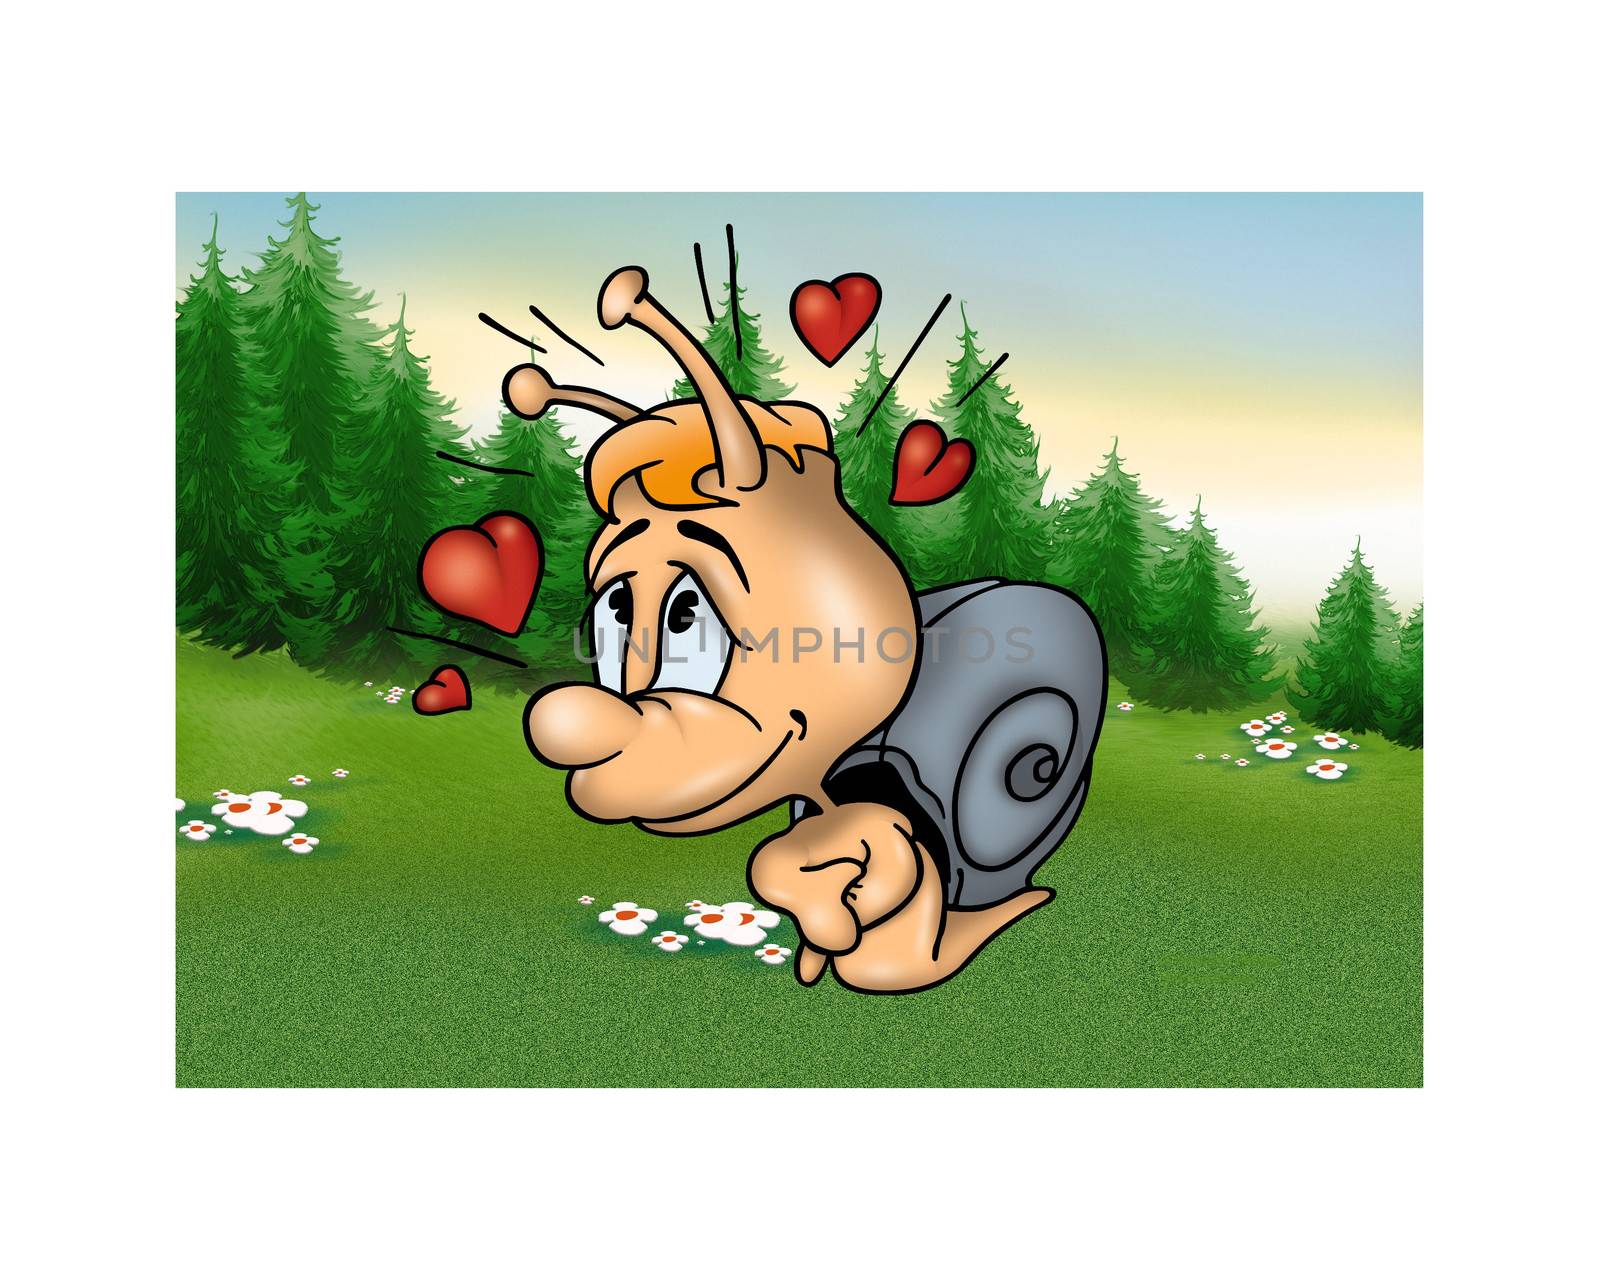 Amorous Snail - Cartoon Background Illustration